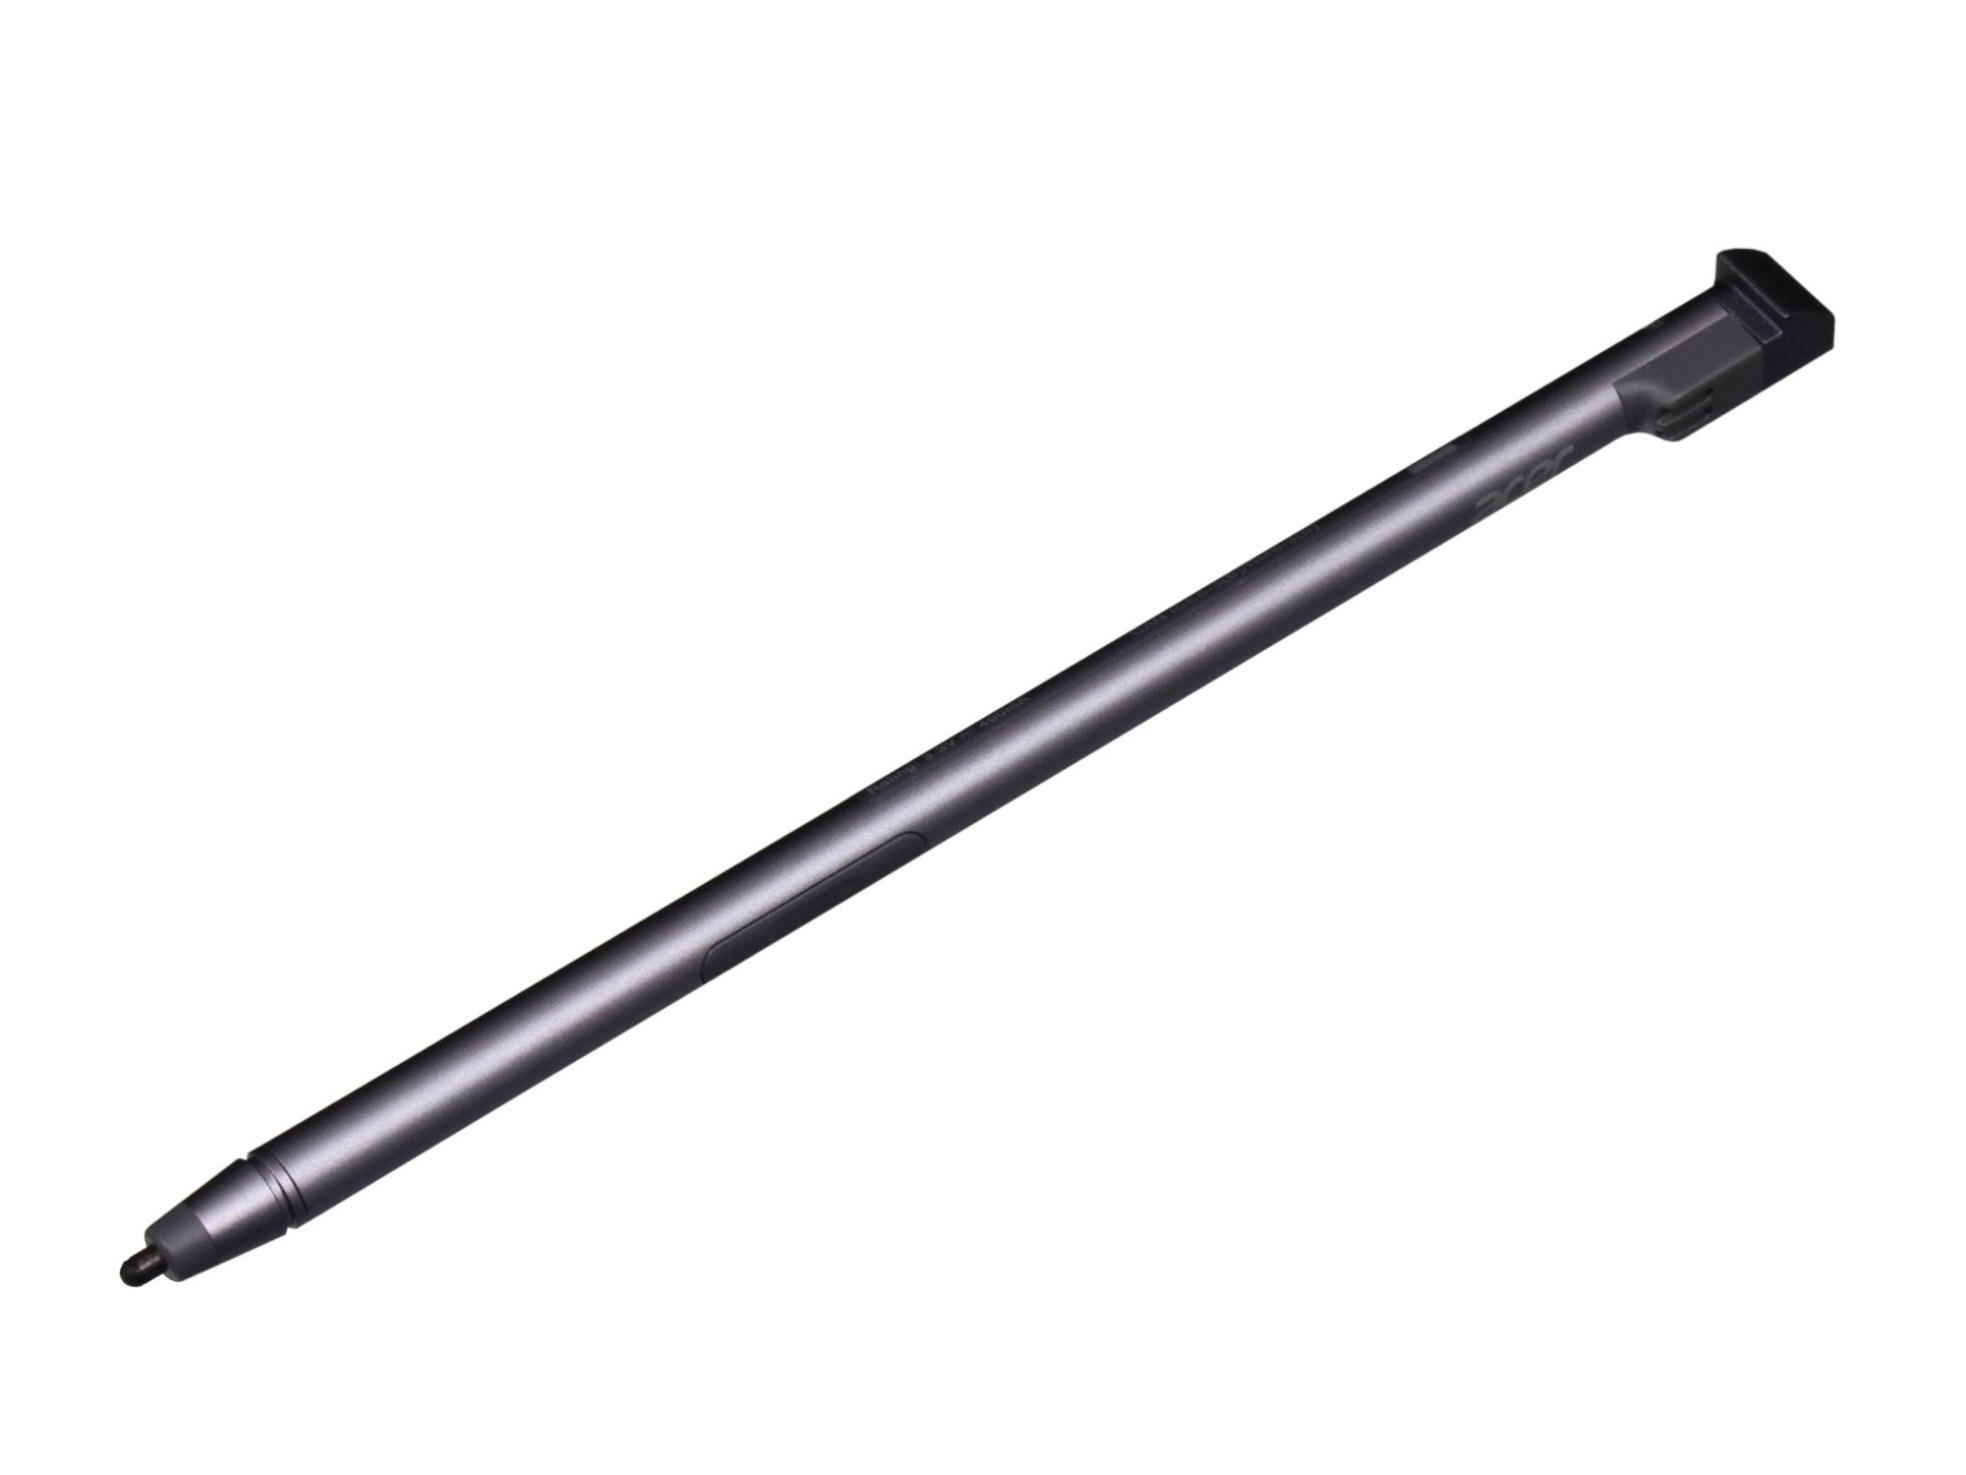 Acer ESP-110-93B-6 Stylus Pen